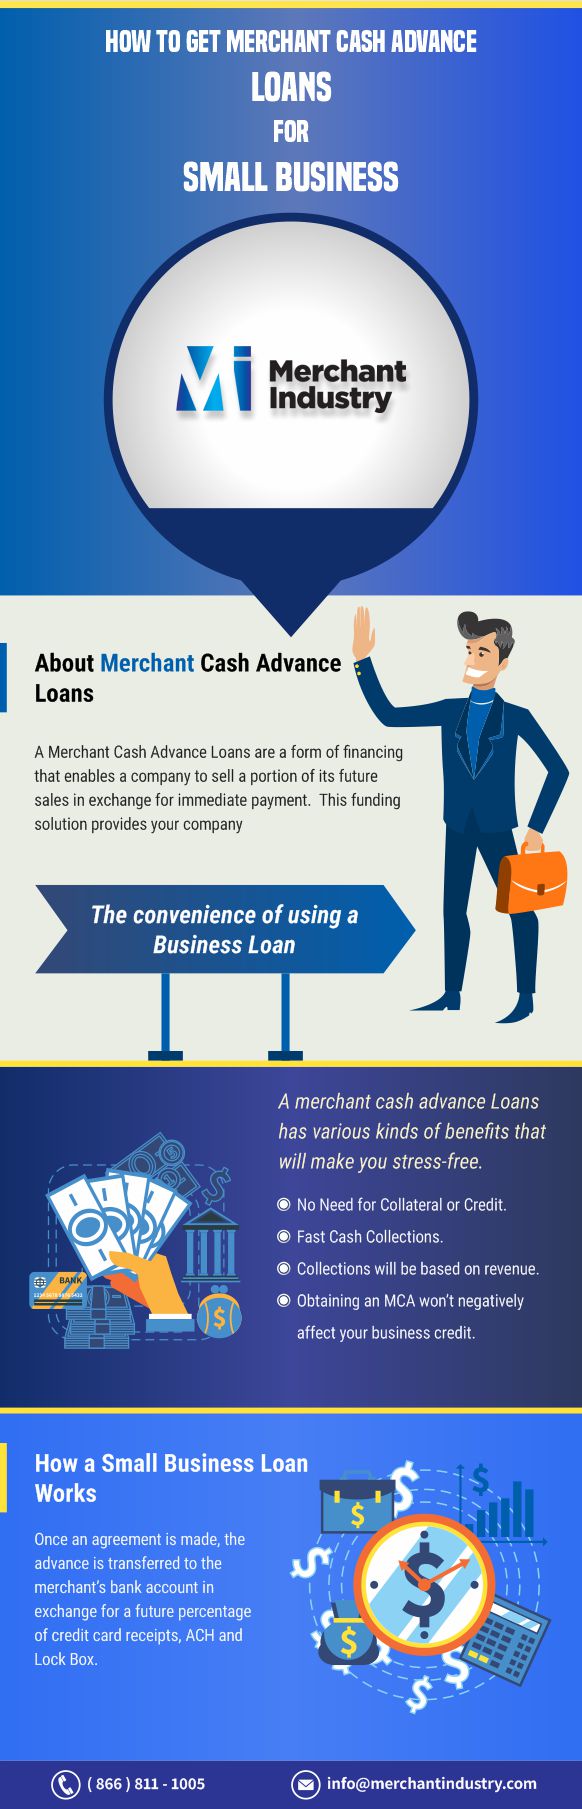 How to get Merchant Cash Advance Loans